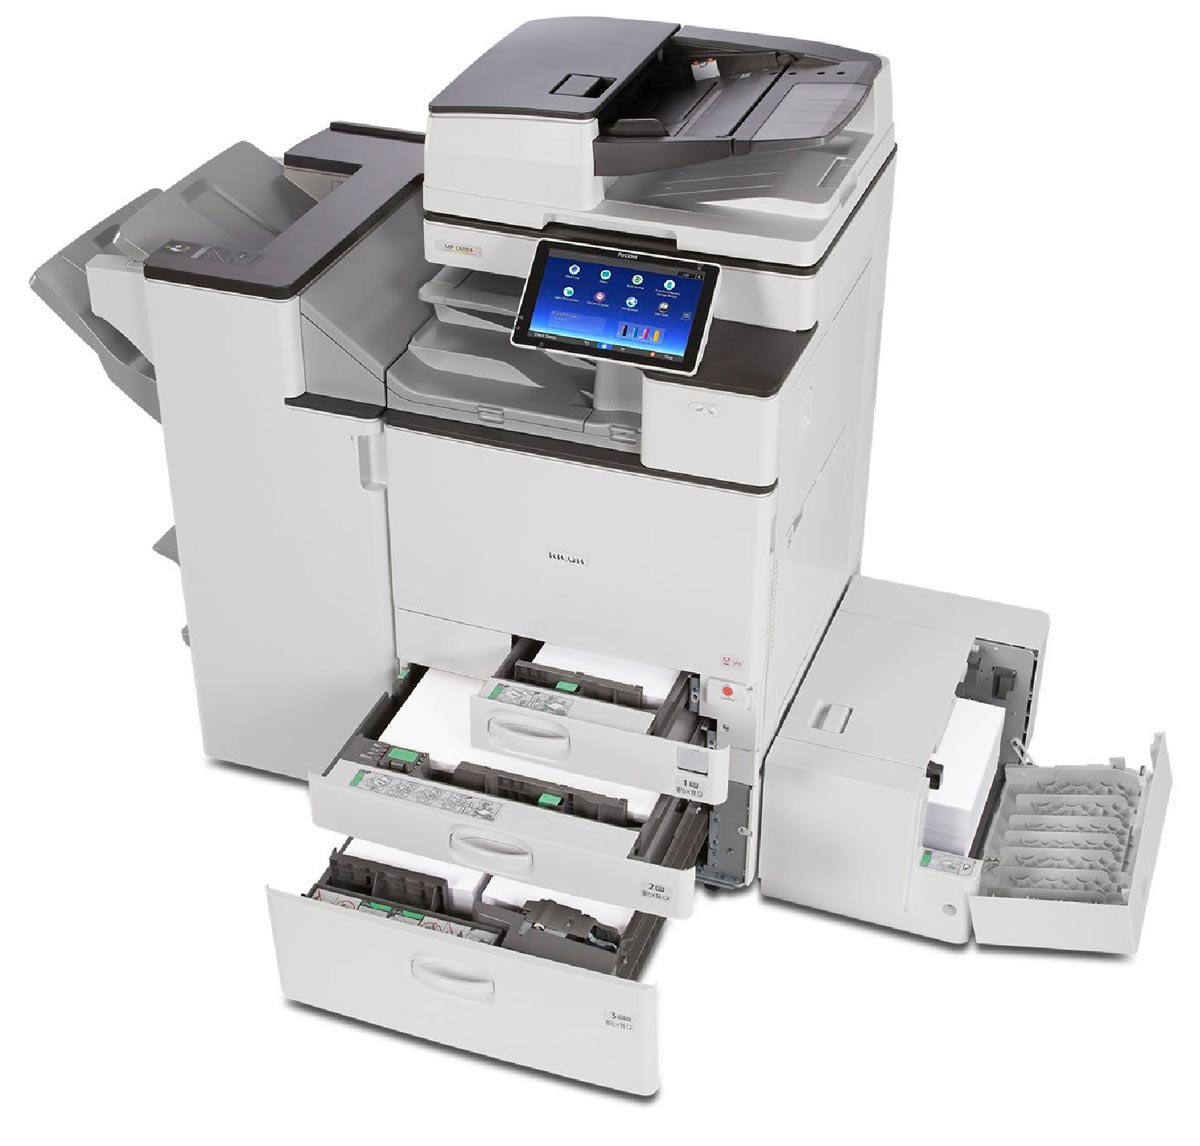 Ricoh MPC4504 Colour Laser Printer